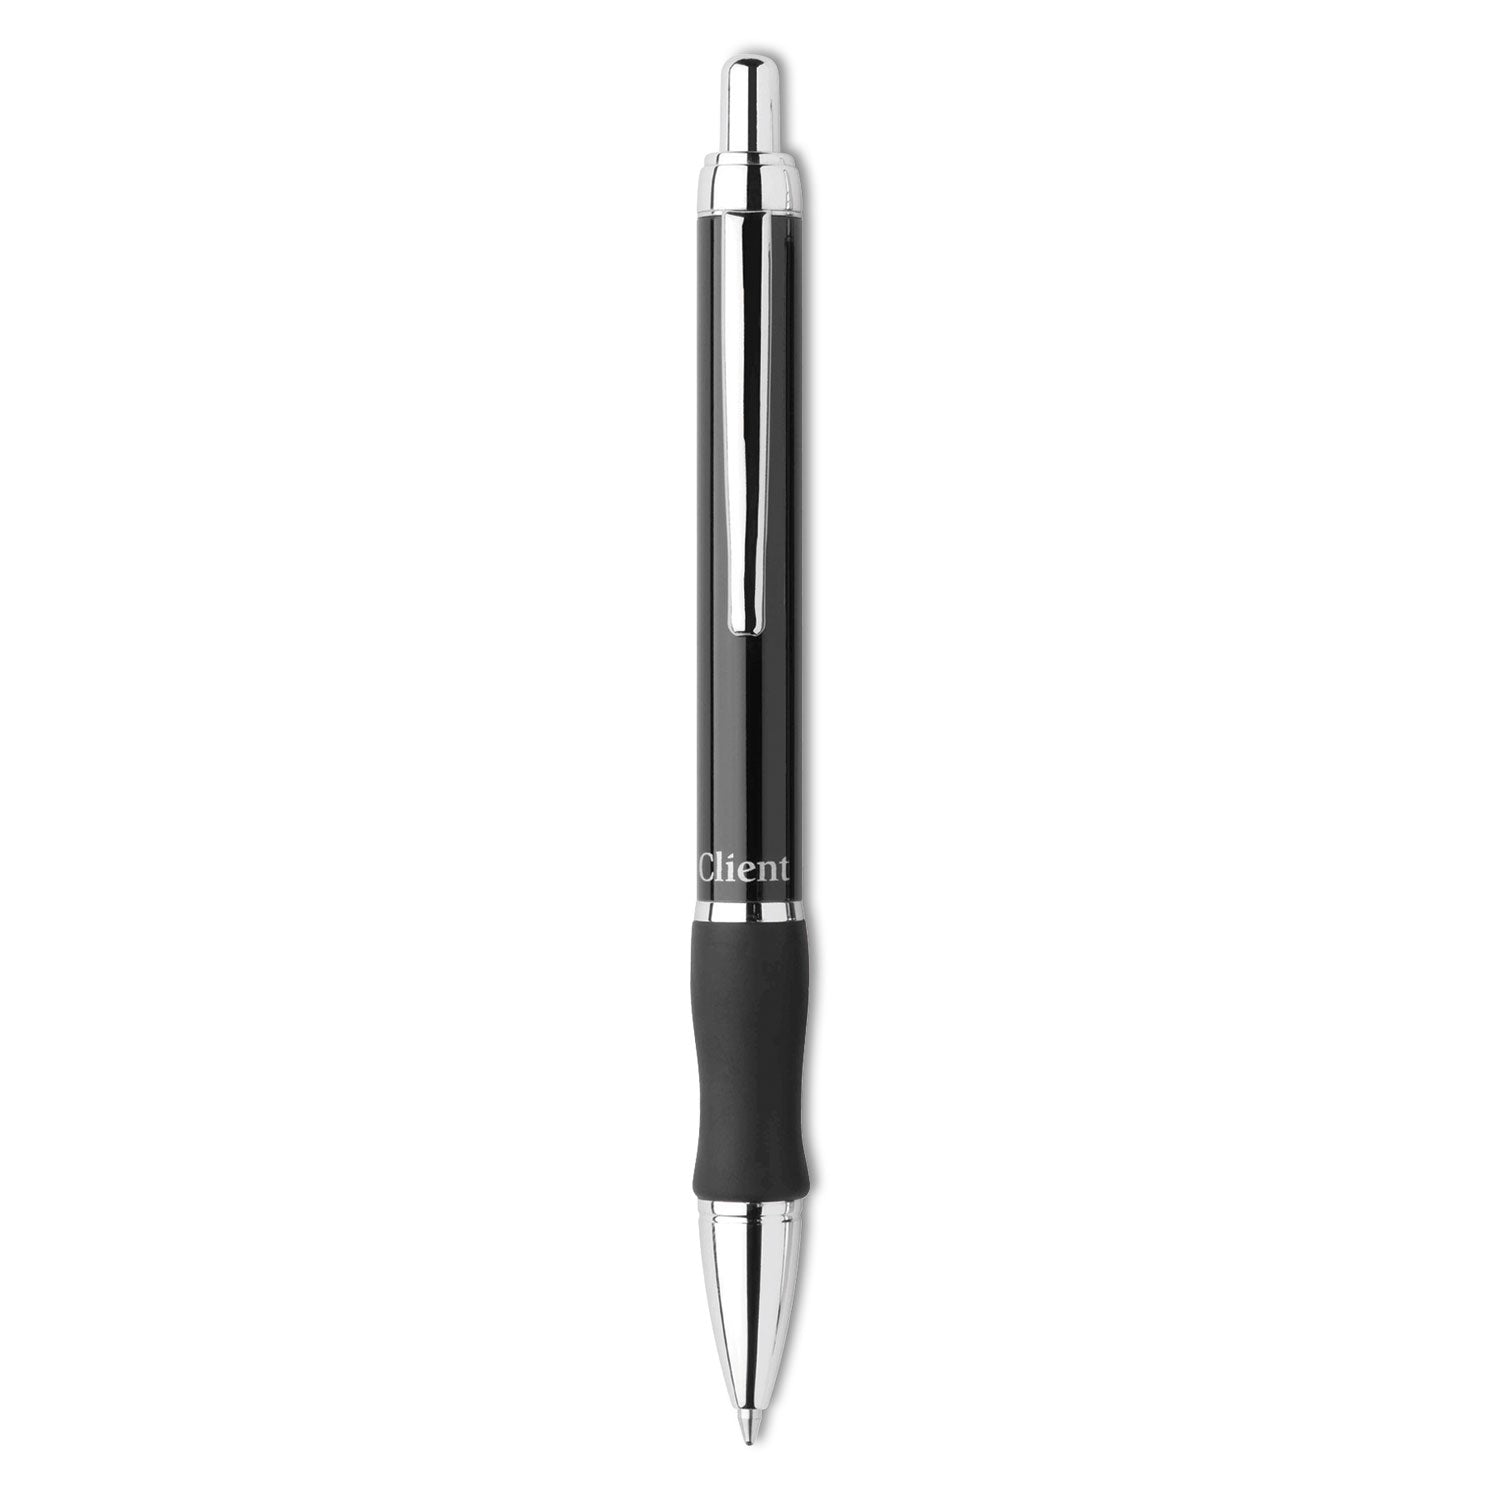 Client Ballpoint Pen, Retractable, Medium 1 mm, Black Ink, High-Gloss Black/Chrome Barrel - 